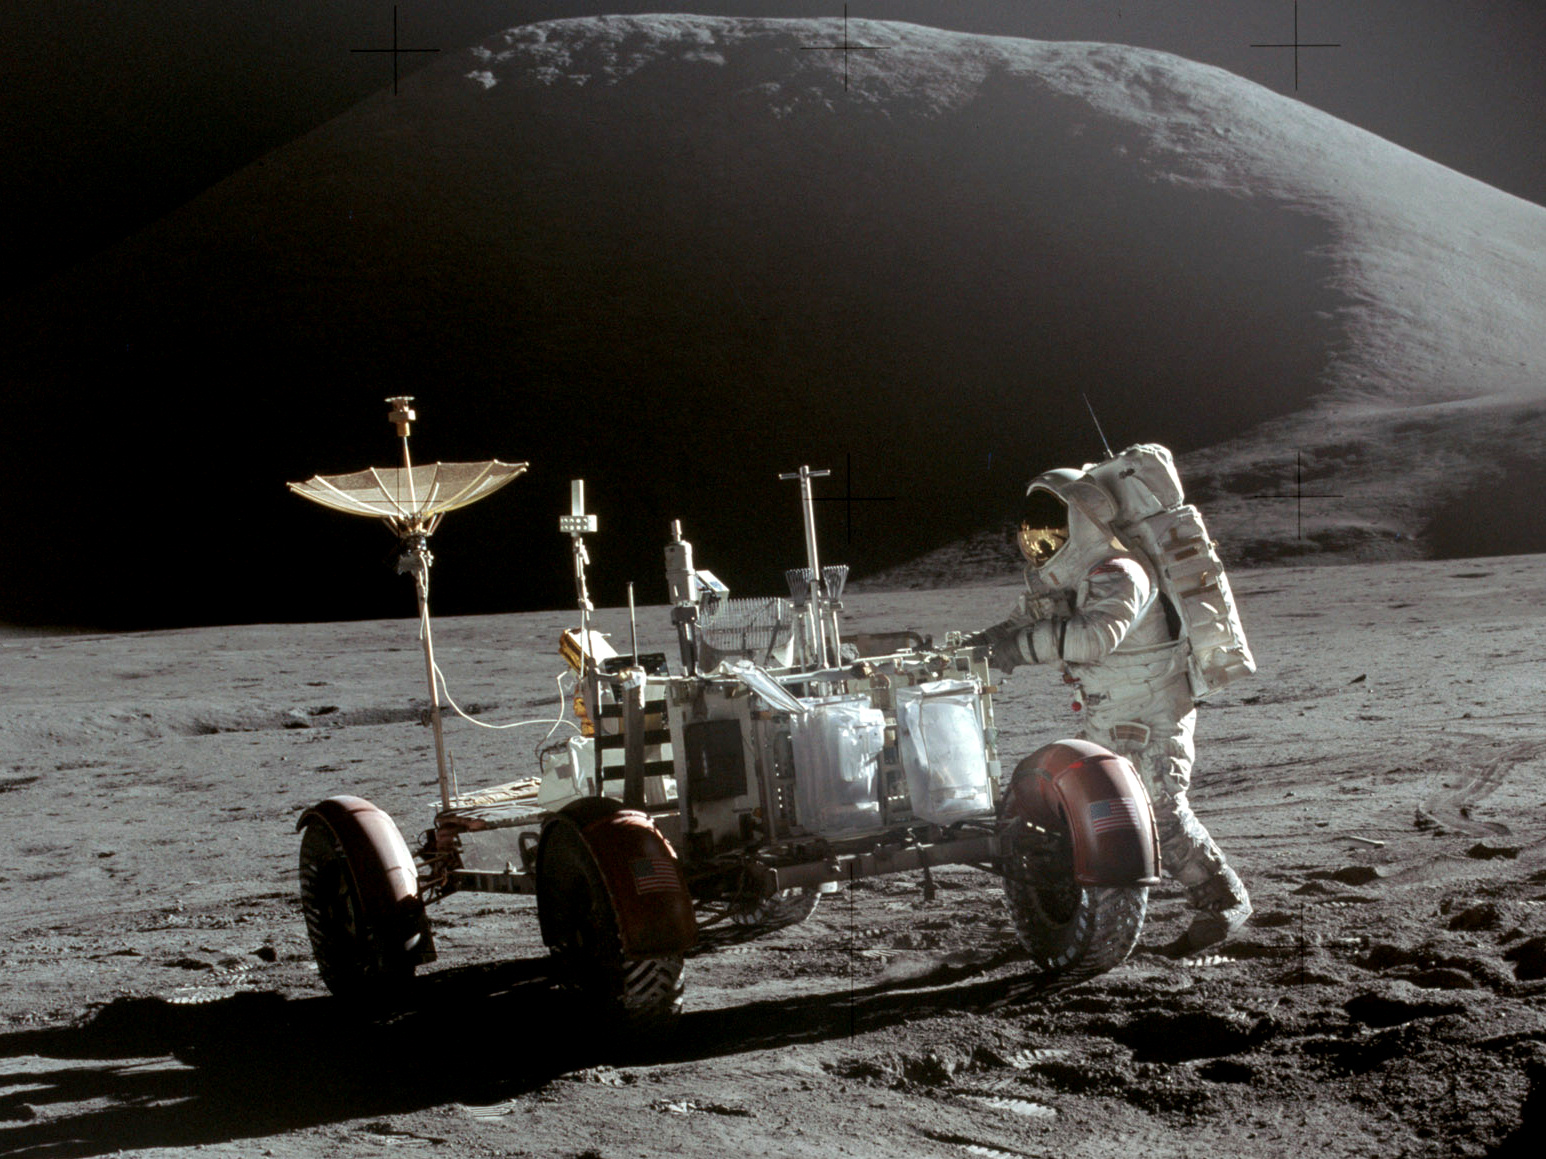 http://upload.wikimedia.org/wikipedia/commons/2/2e/Apollo_15_Lunar_Rover_and_Irwin.jpg